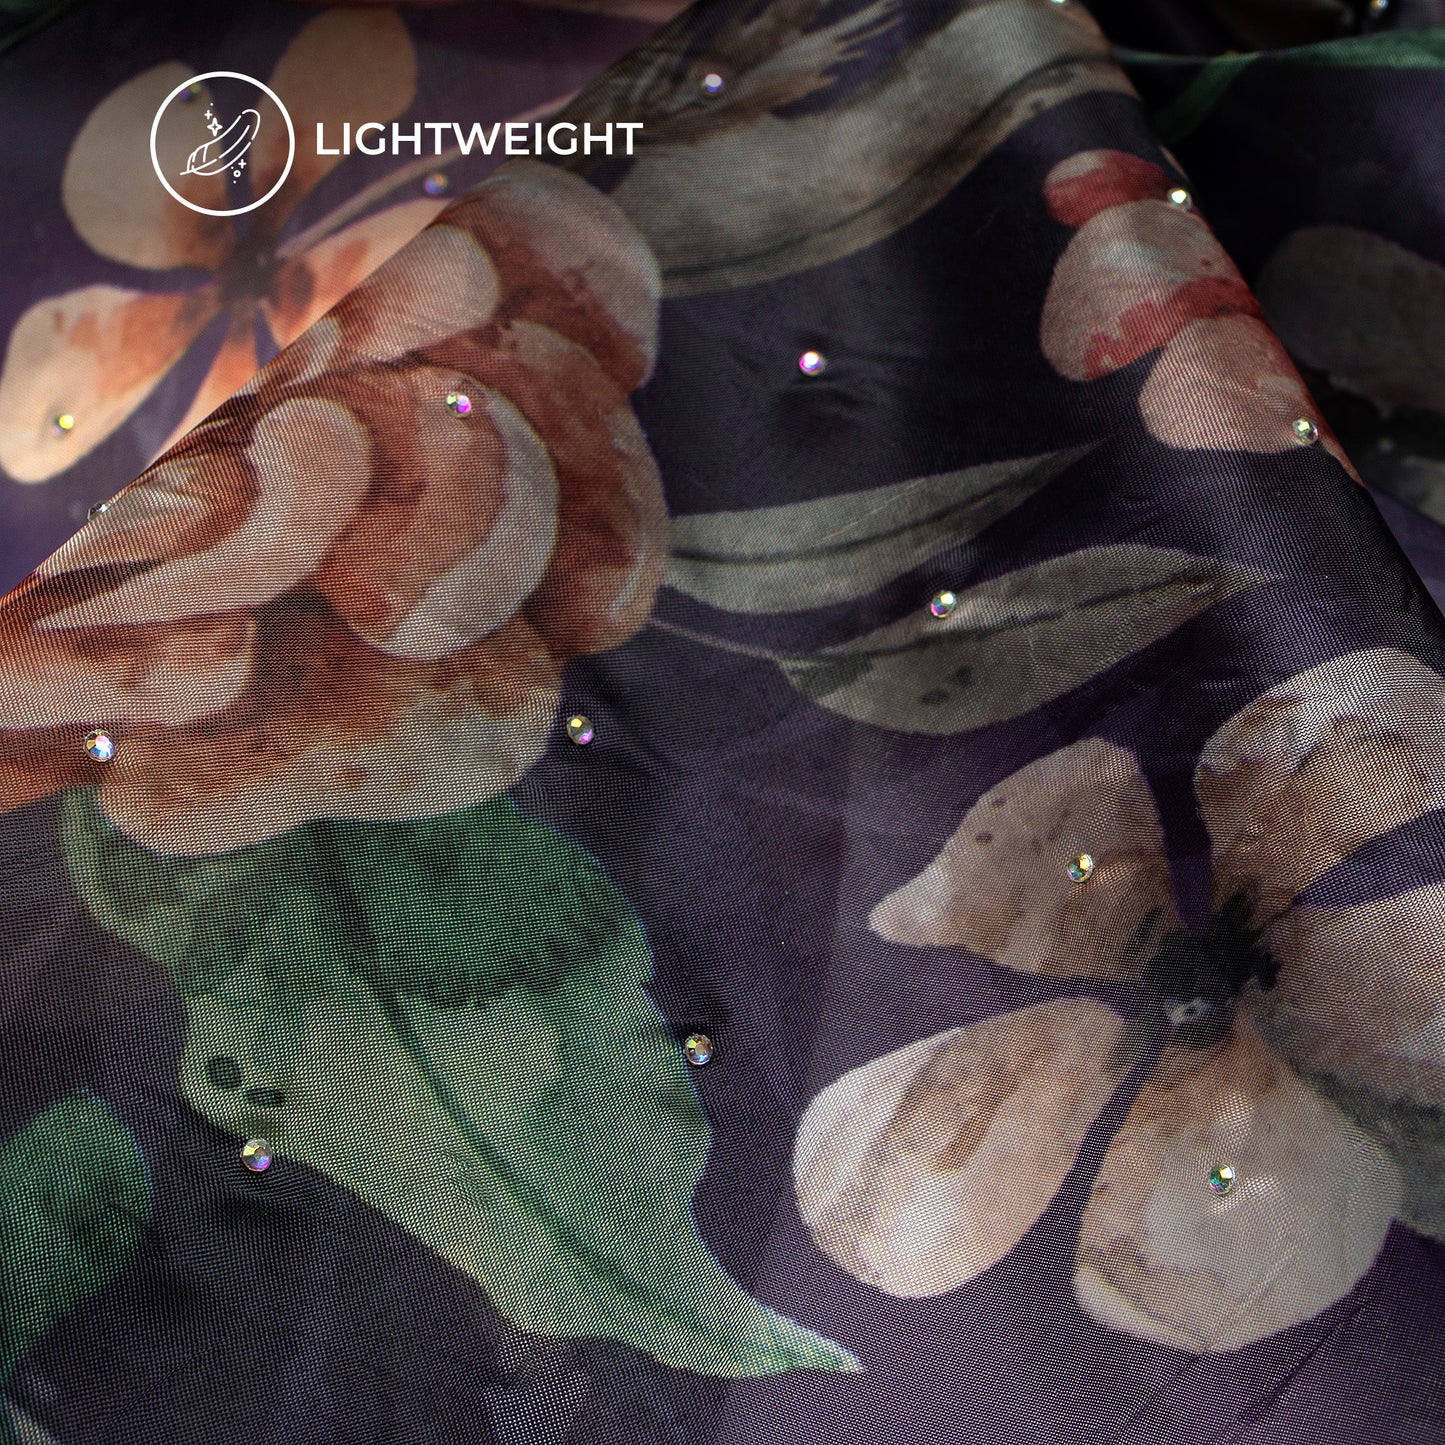 Floral Flair Digital Print Premium Swarovski Handwork Liquid Organza Fabric